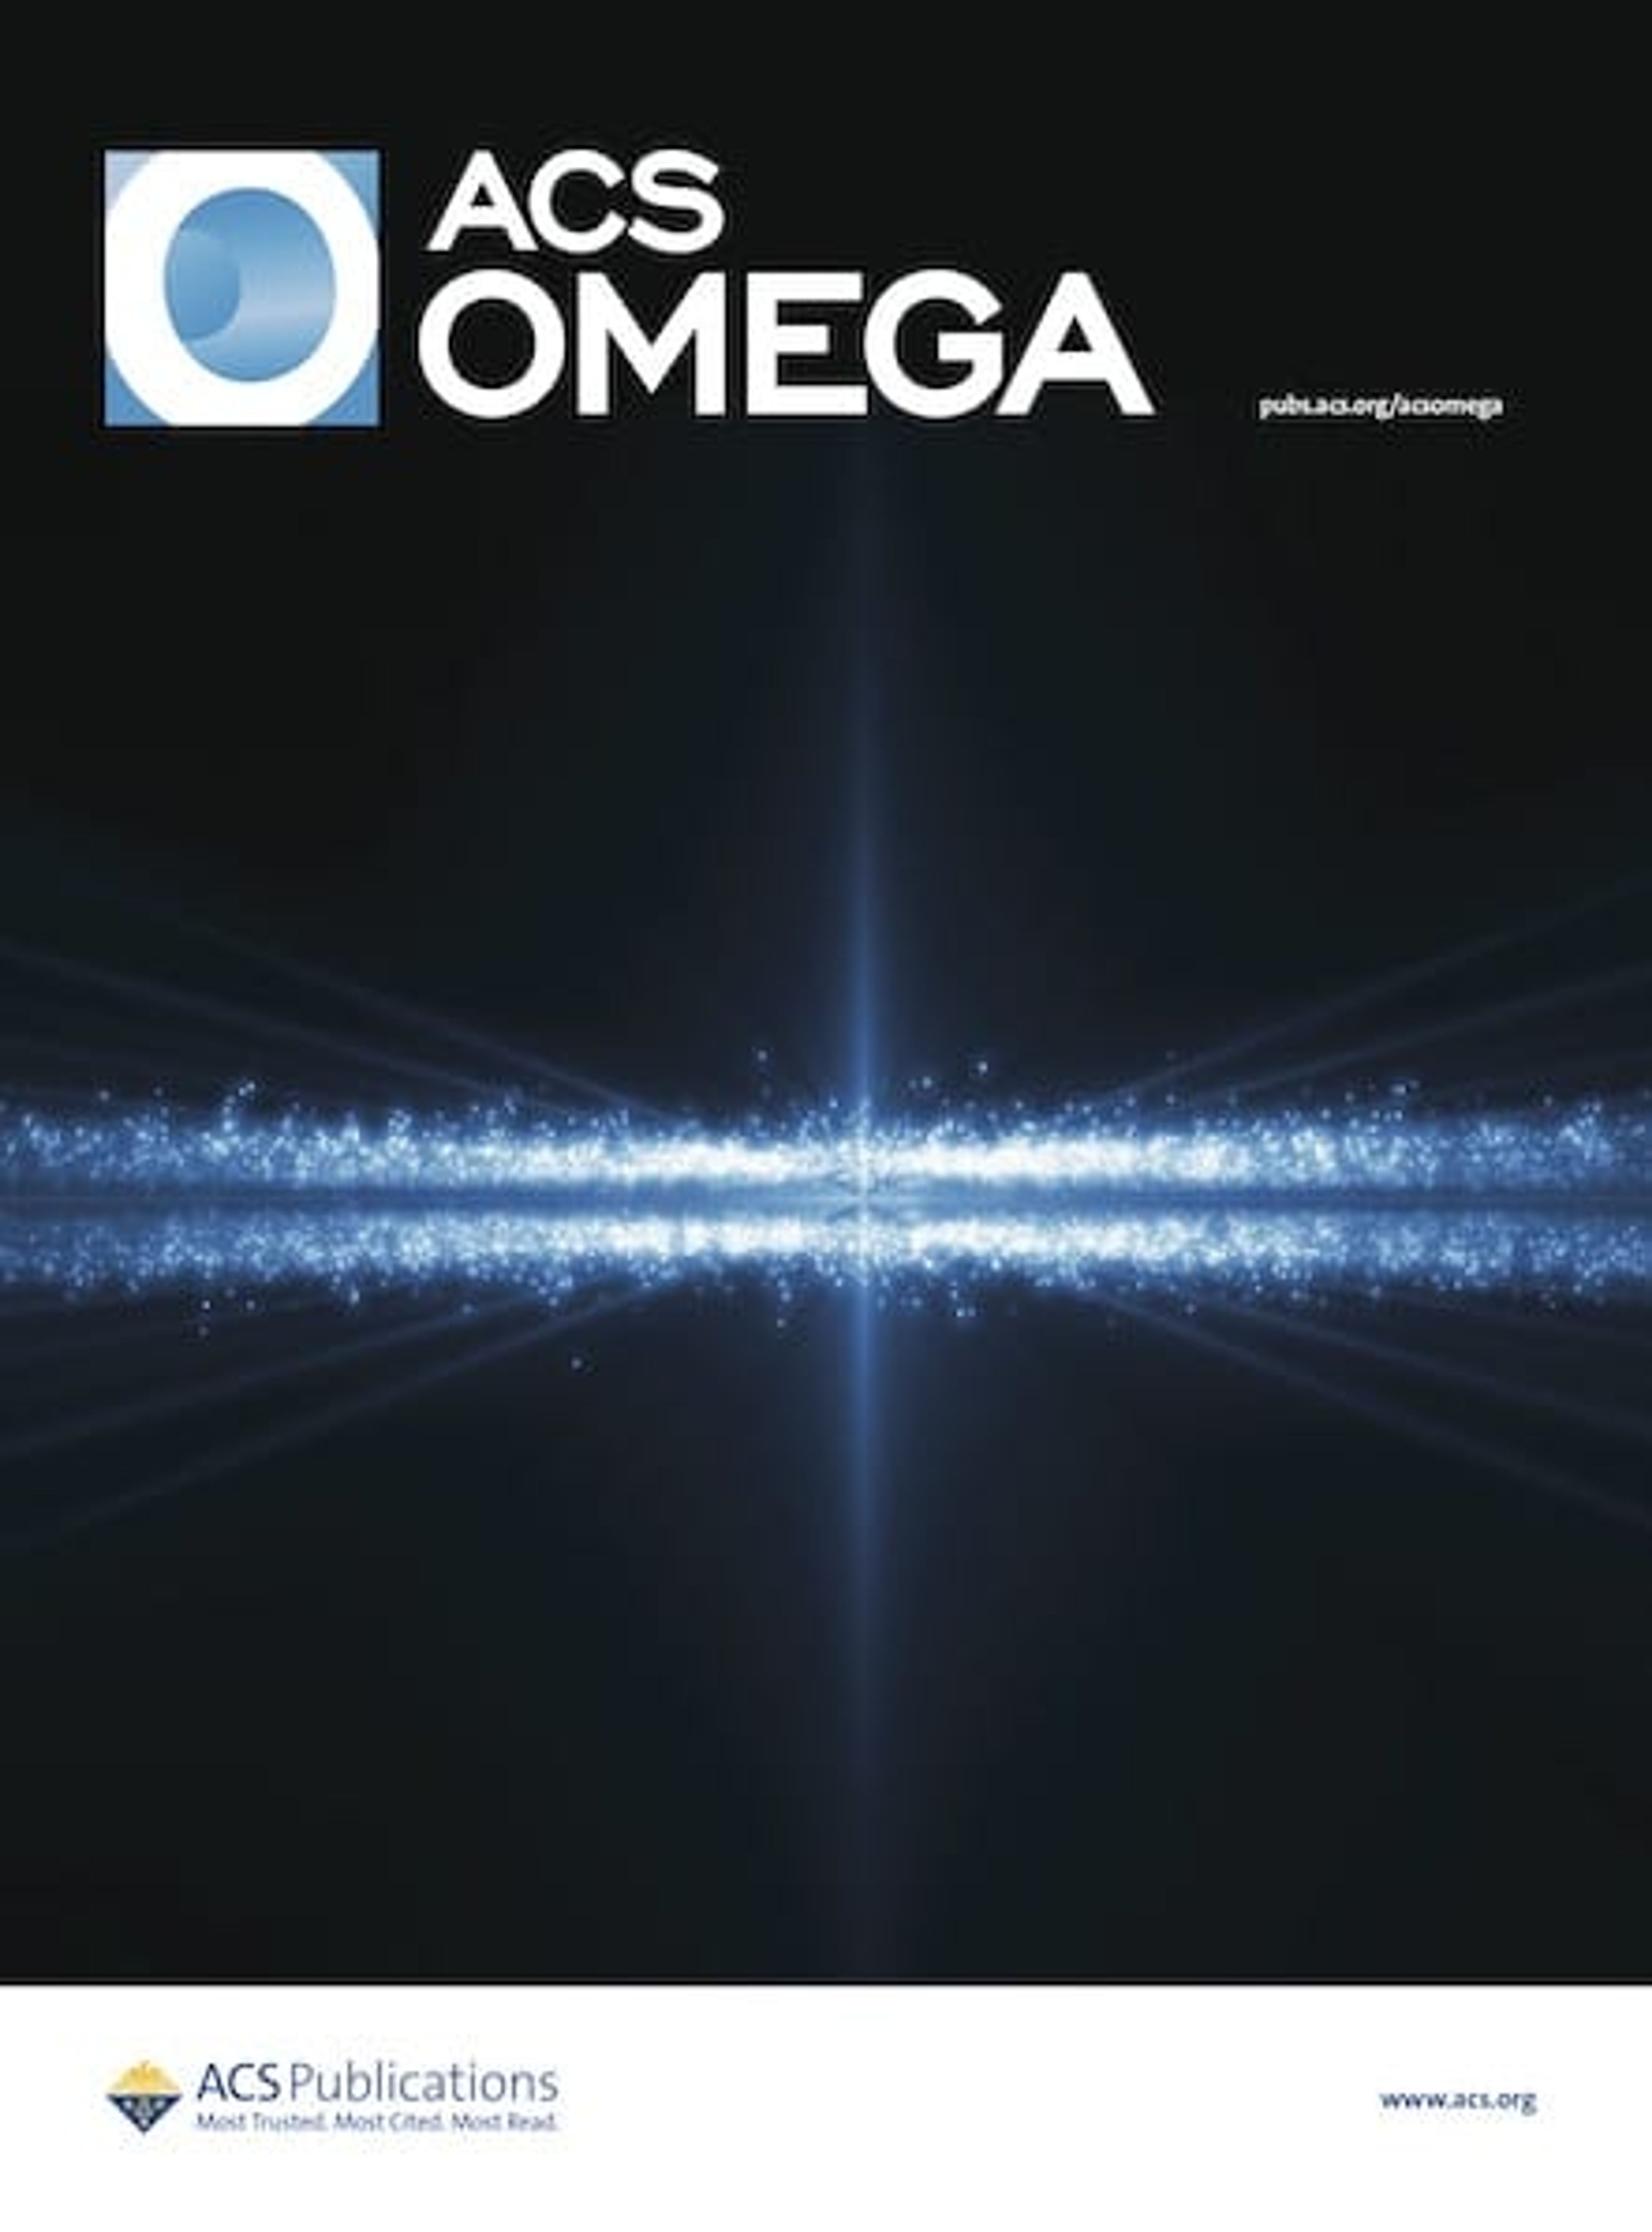 5 Reasons to Publish Access ACS Omega | ACS Publications Chemistry Blog